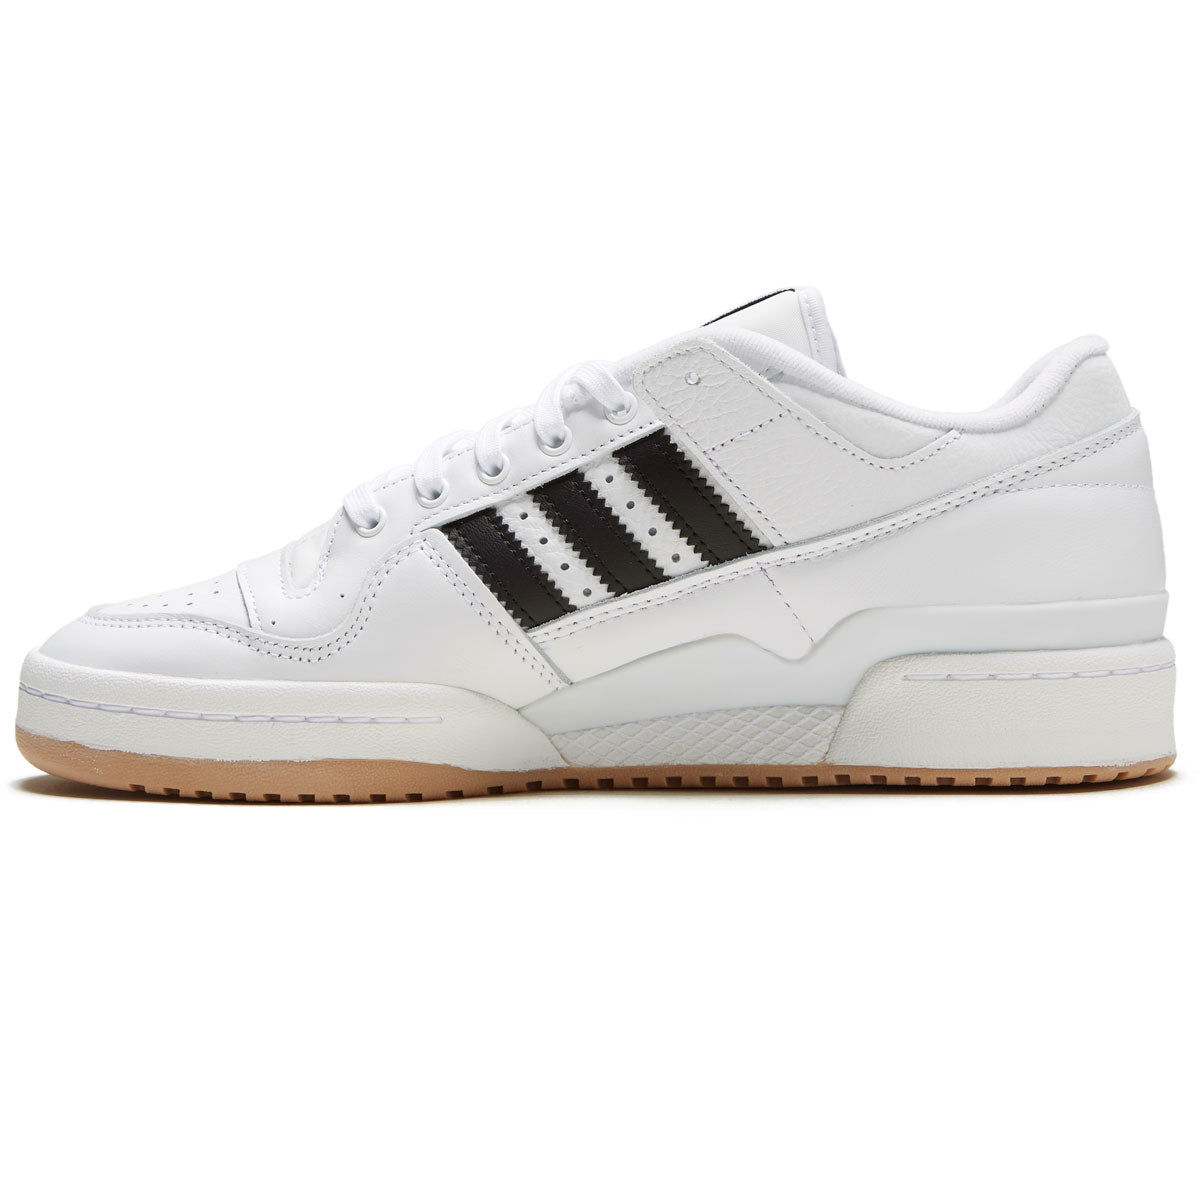 Adidas Forum 84 Low ADV Shoes - White/Core Black/White image 2